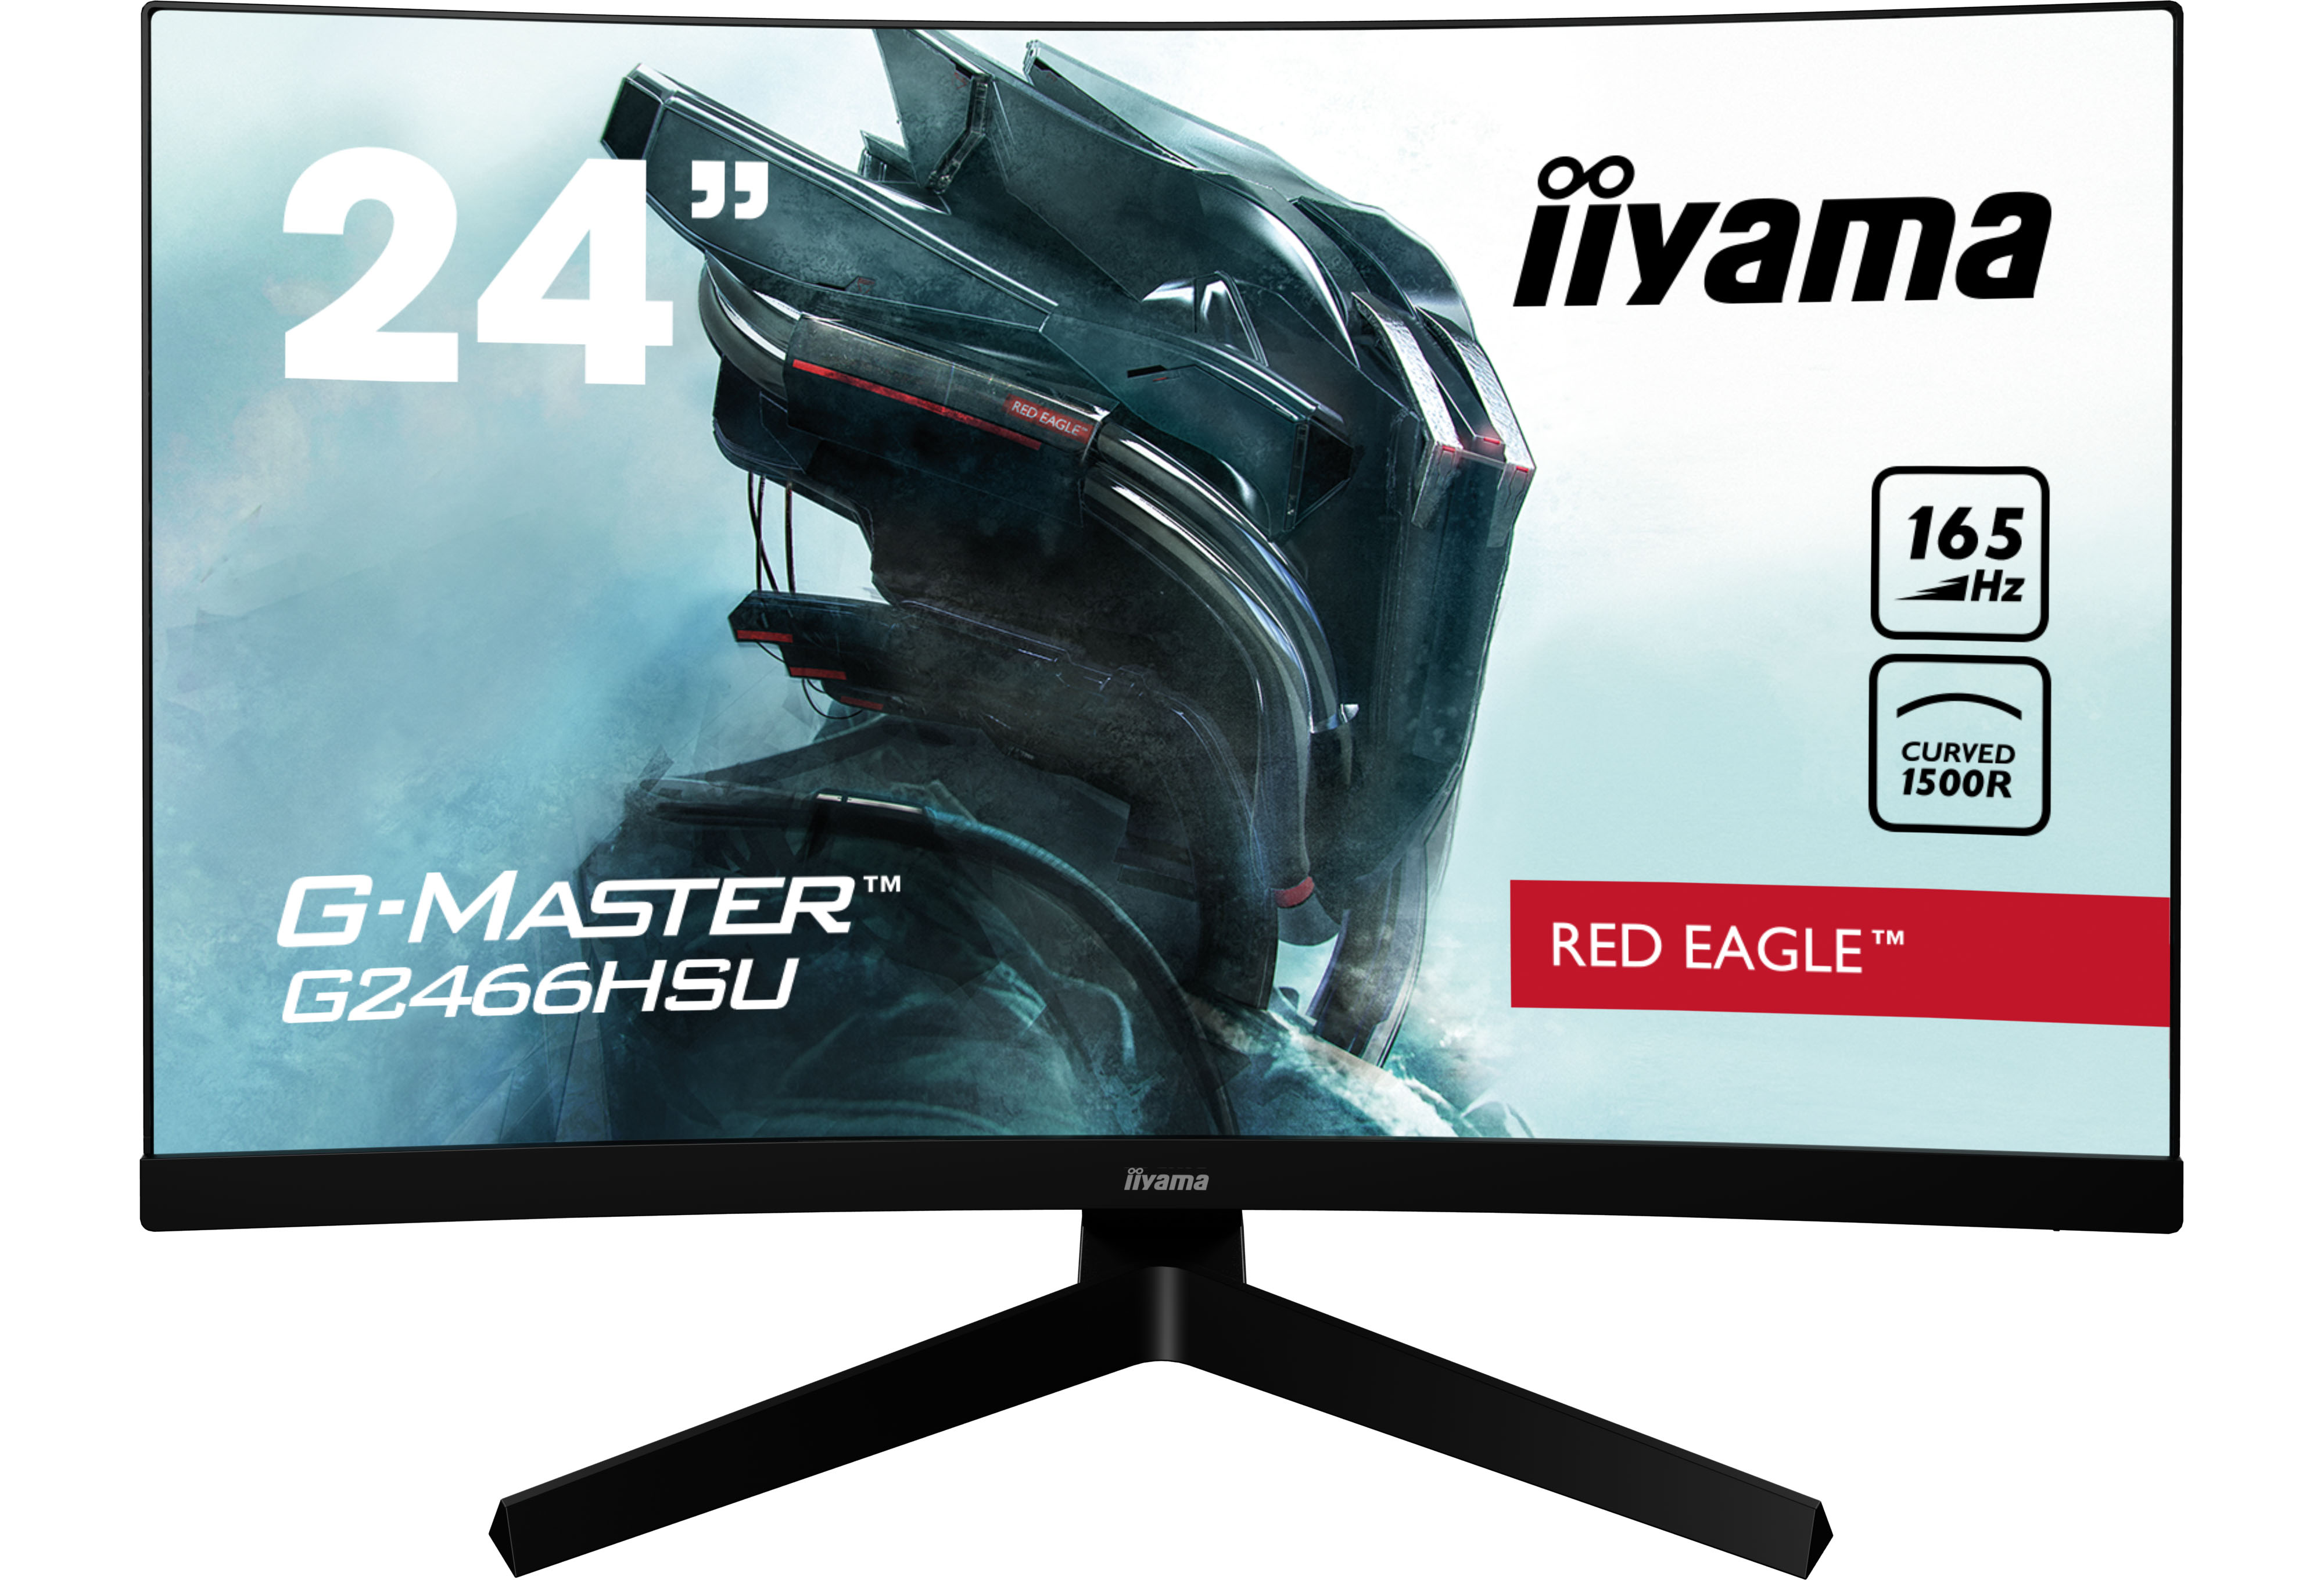 Iiyama G-MASTER G2466HSU-B1 RED EAGLE | 24" | 165Hz | Curved Gaming Monitor